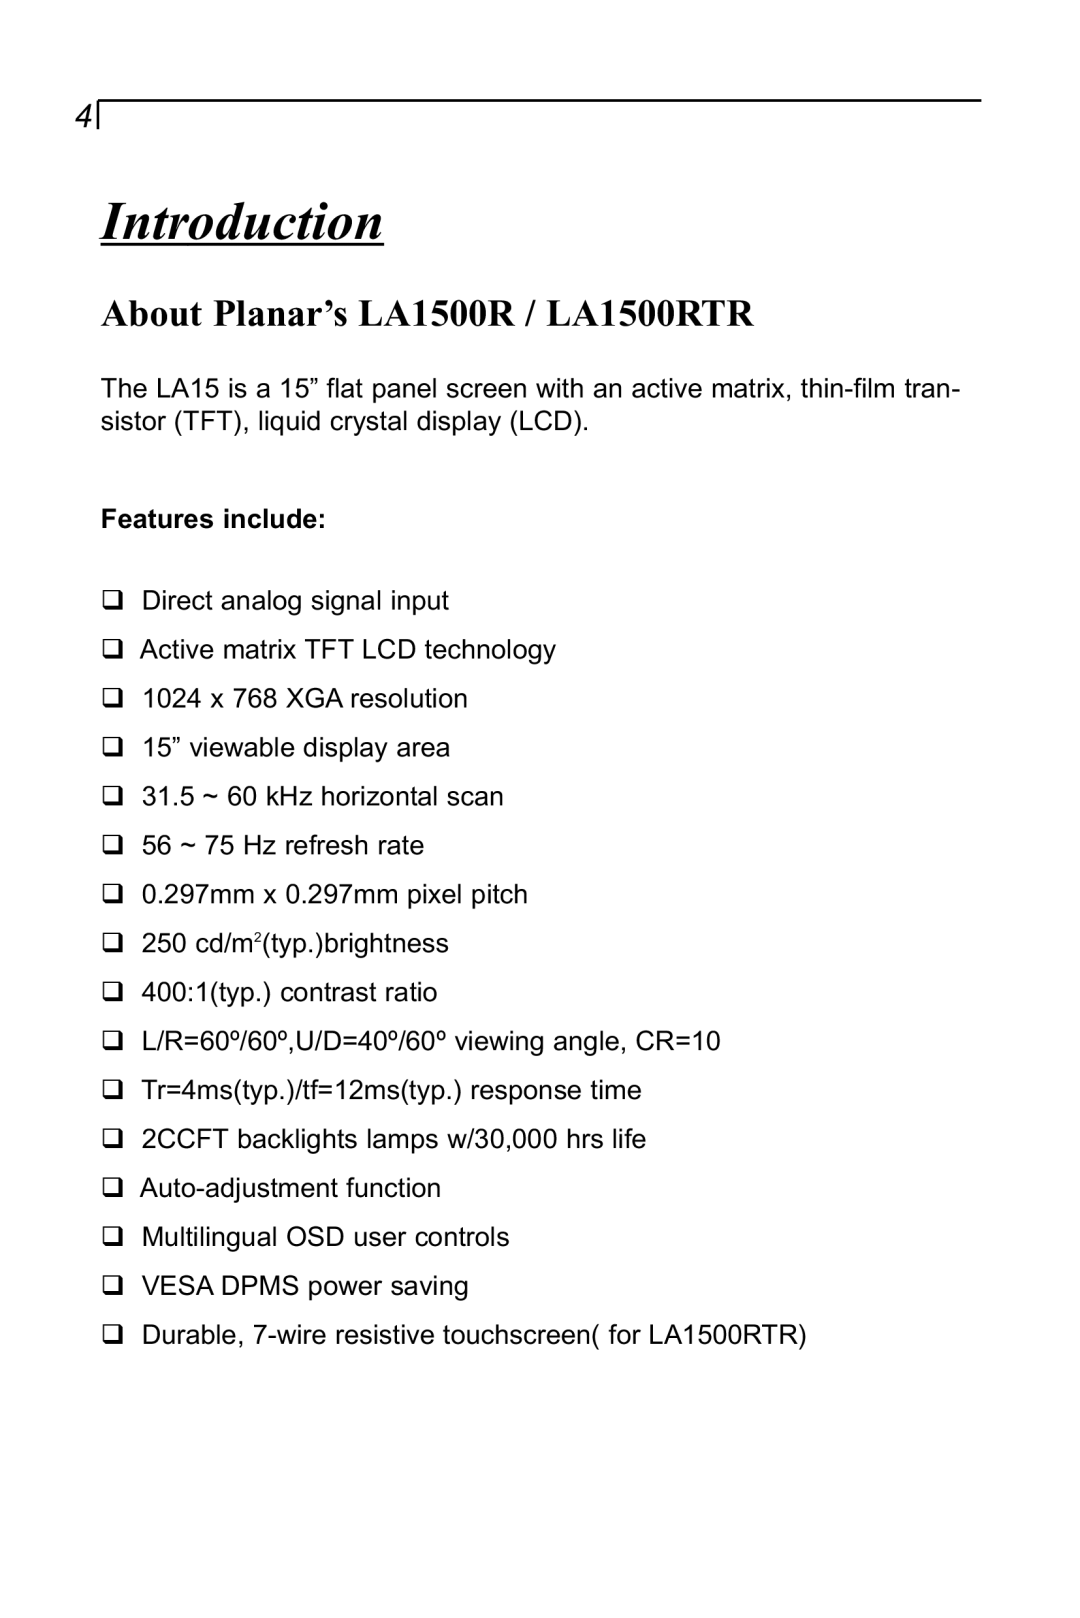 Planar manual Introduction, About Planar’s LA1500R / LA1500RTR, Features include 